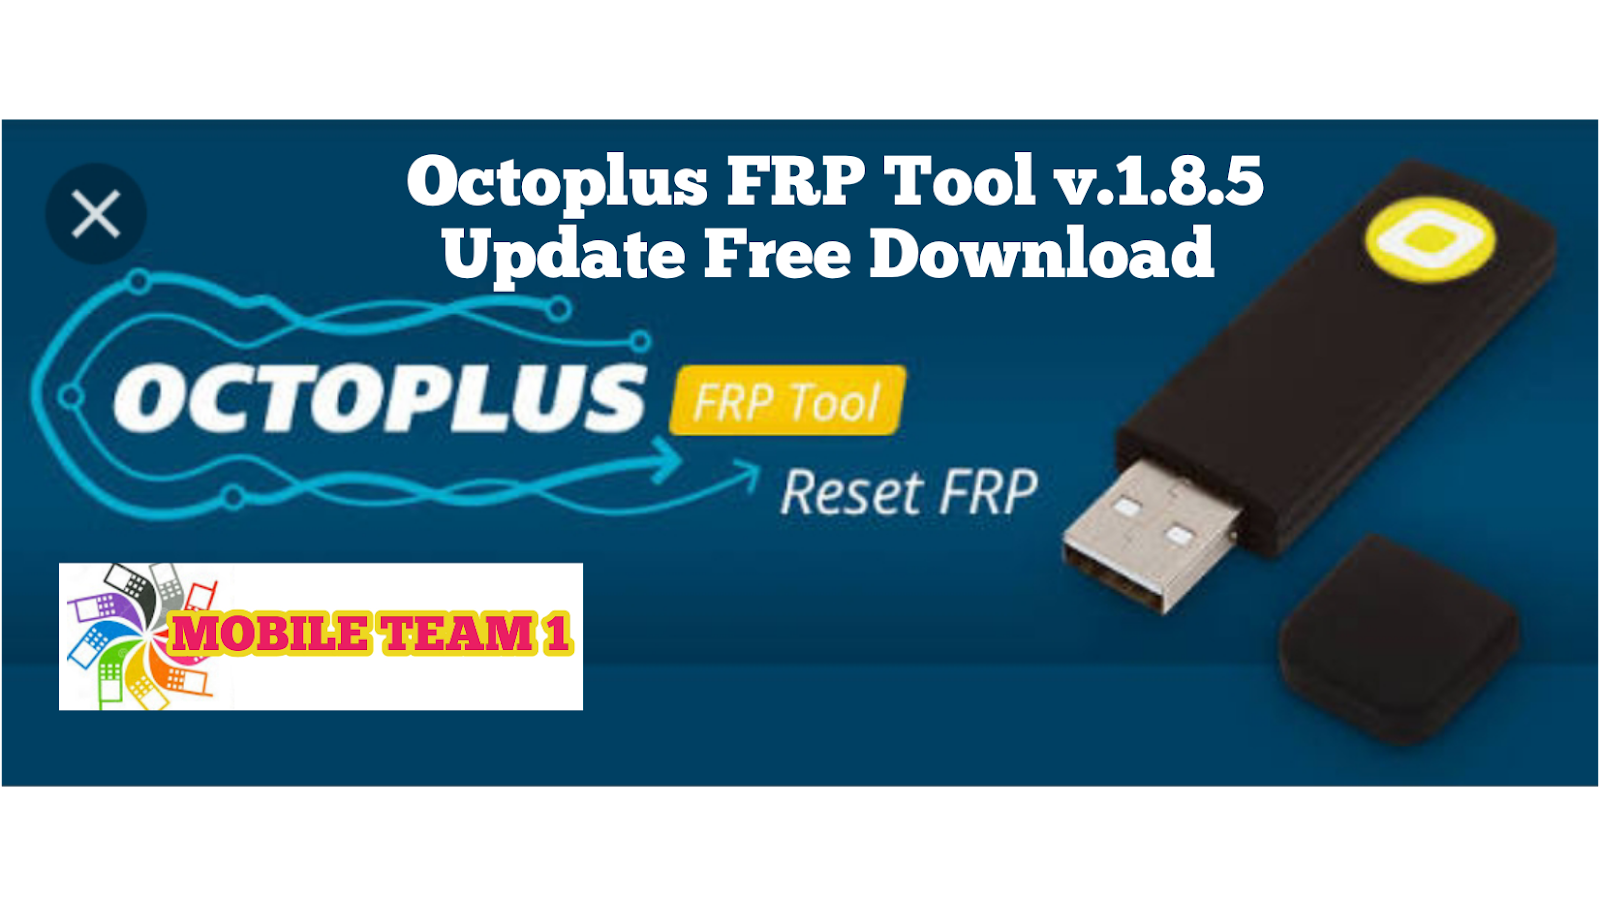 octoplus frp tool free